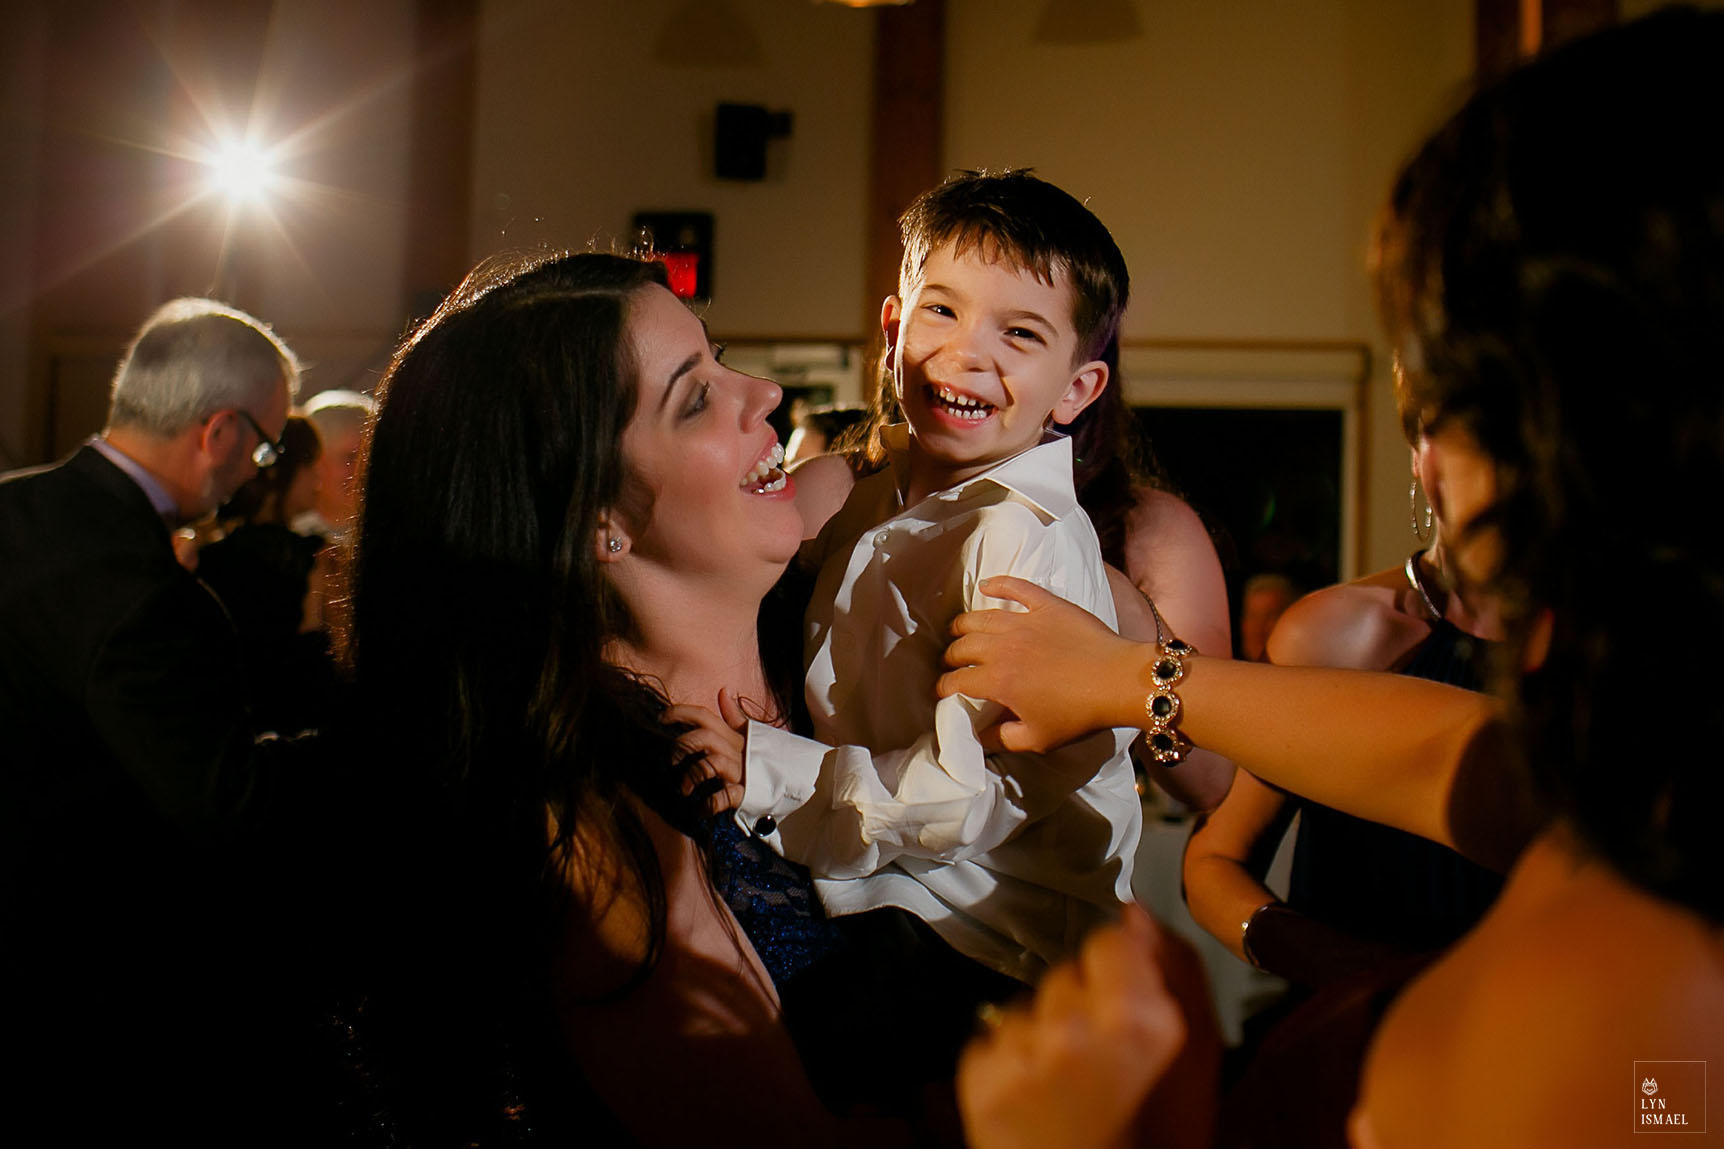 Little boy dances with his mother at a wedding reception in Grey Silo, a rustic wedding venue in Waterloo, Ontario.